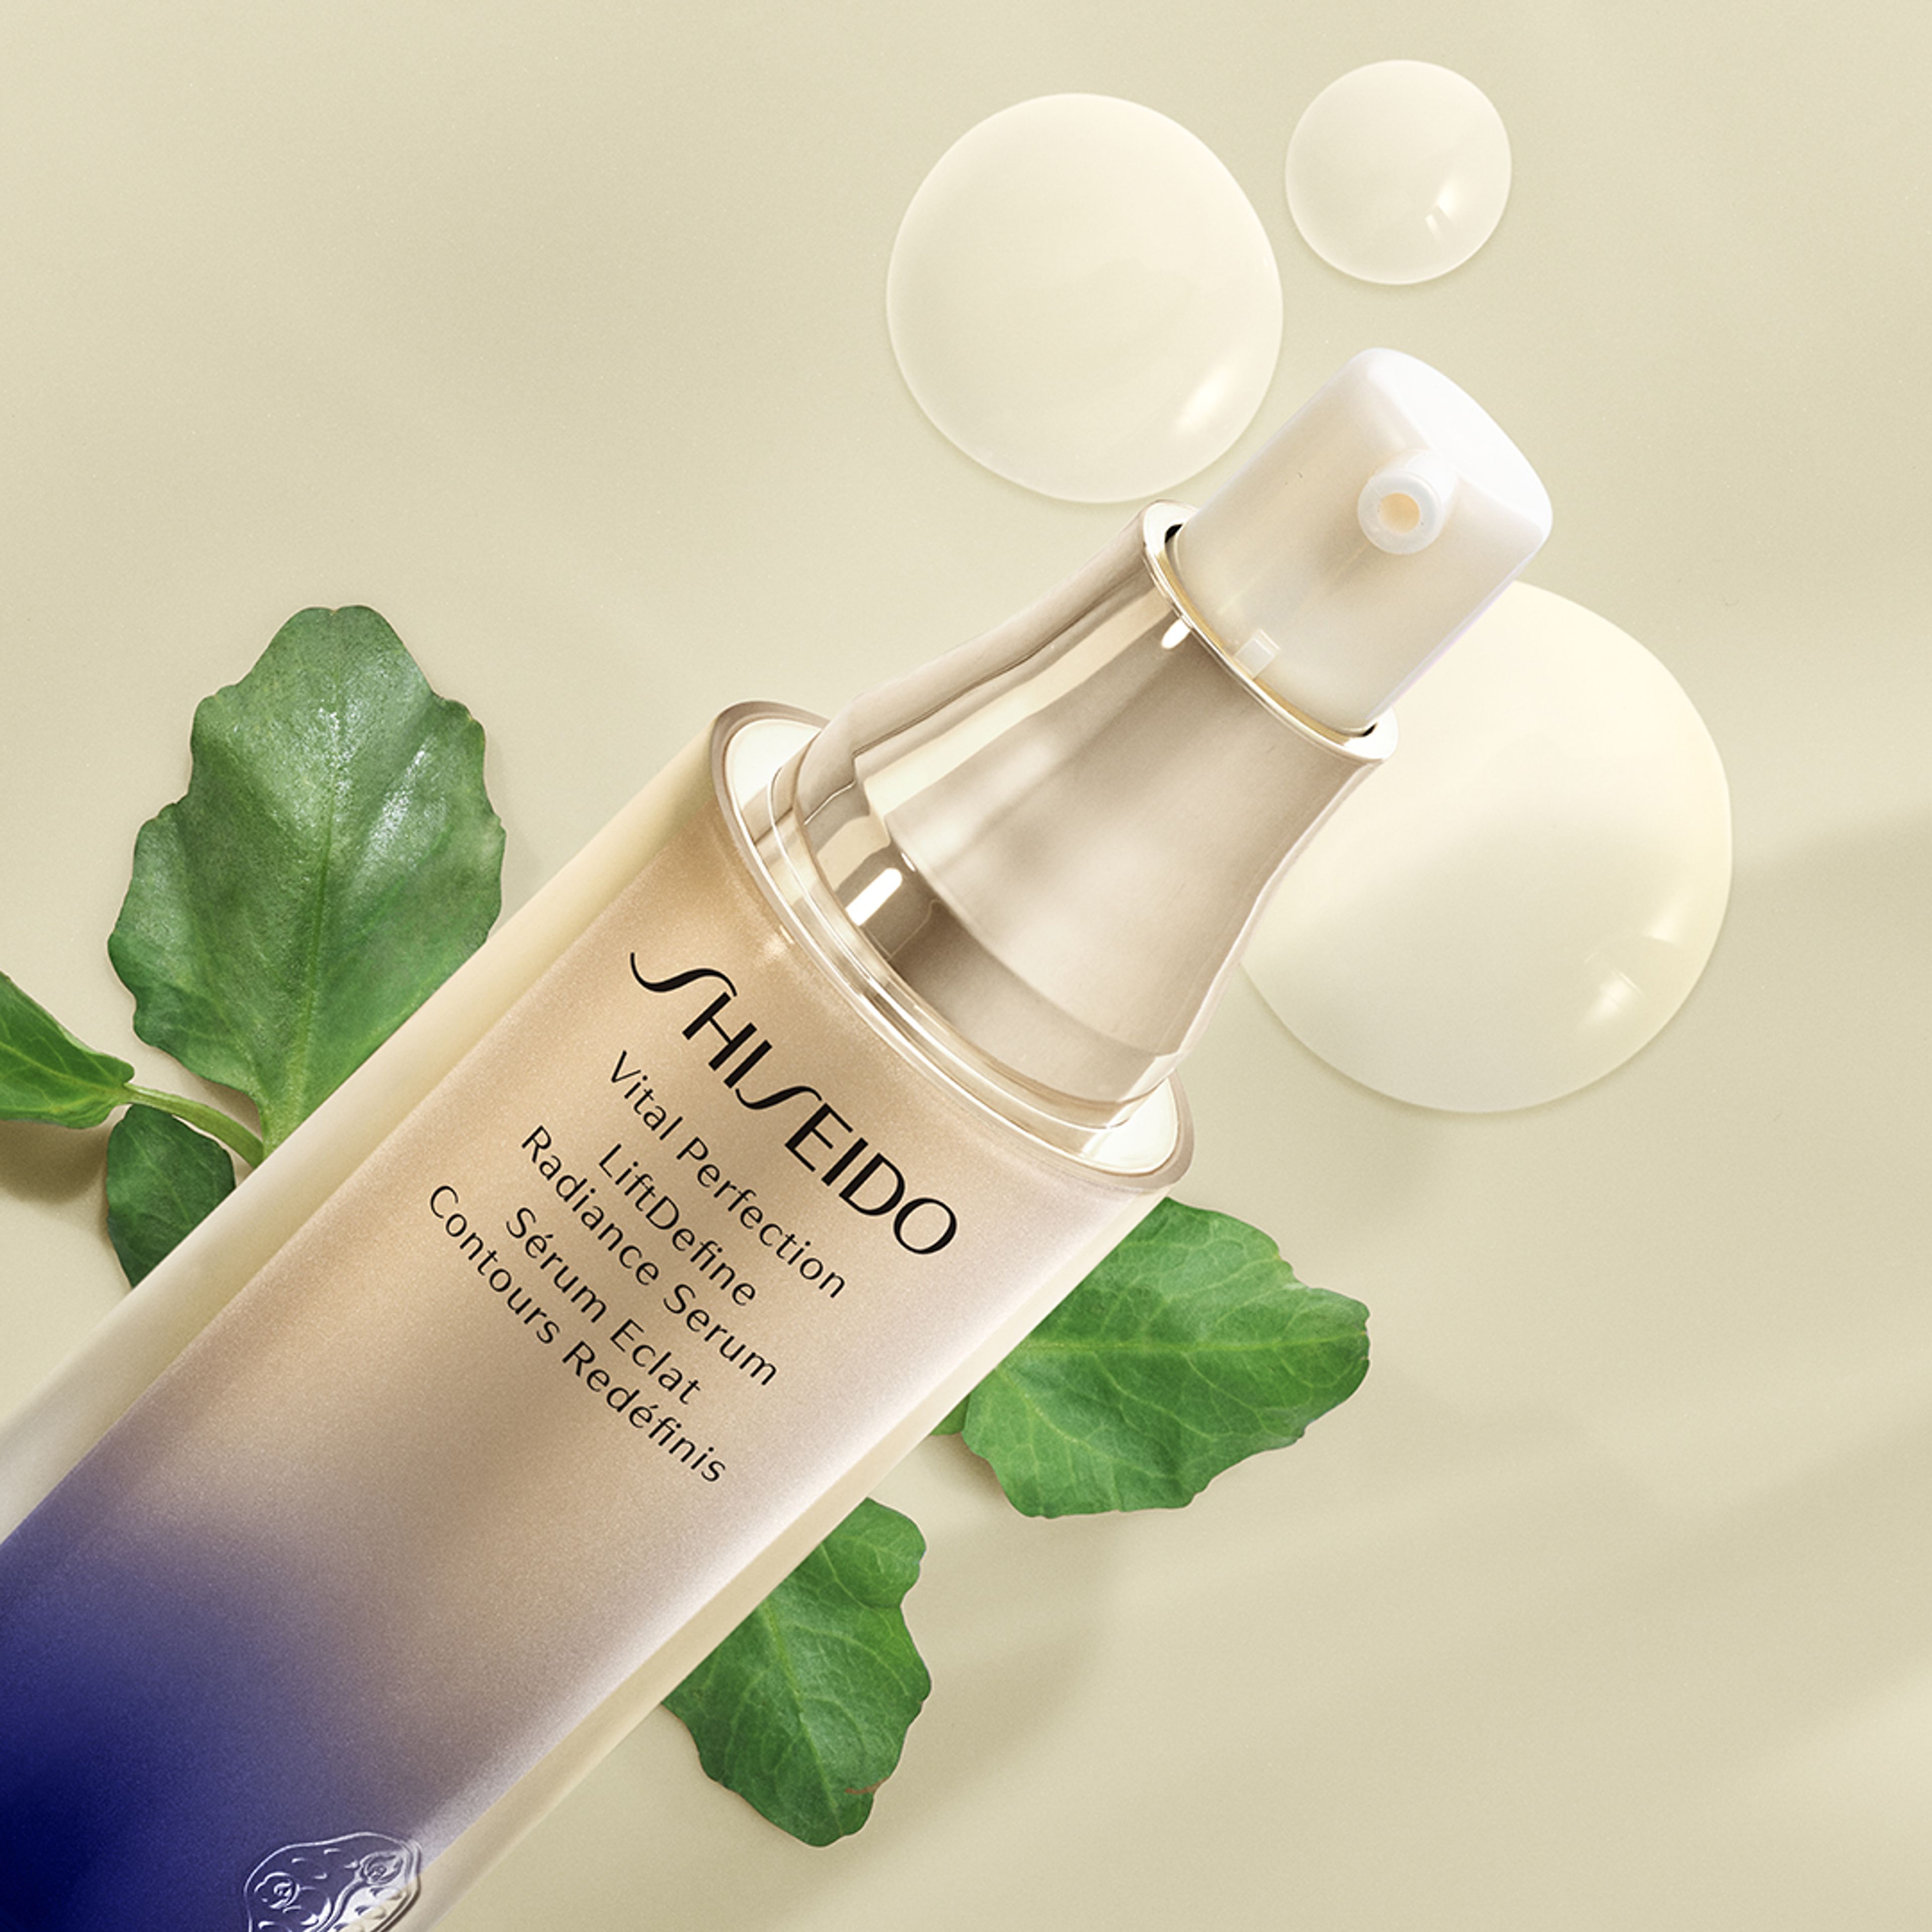 Shiseido Liftdefine Radiance Serum 2